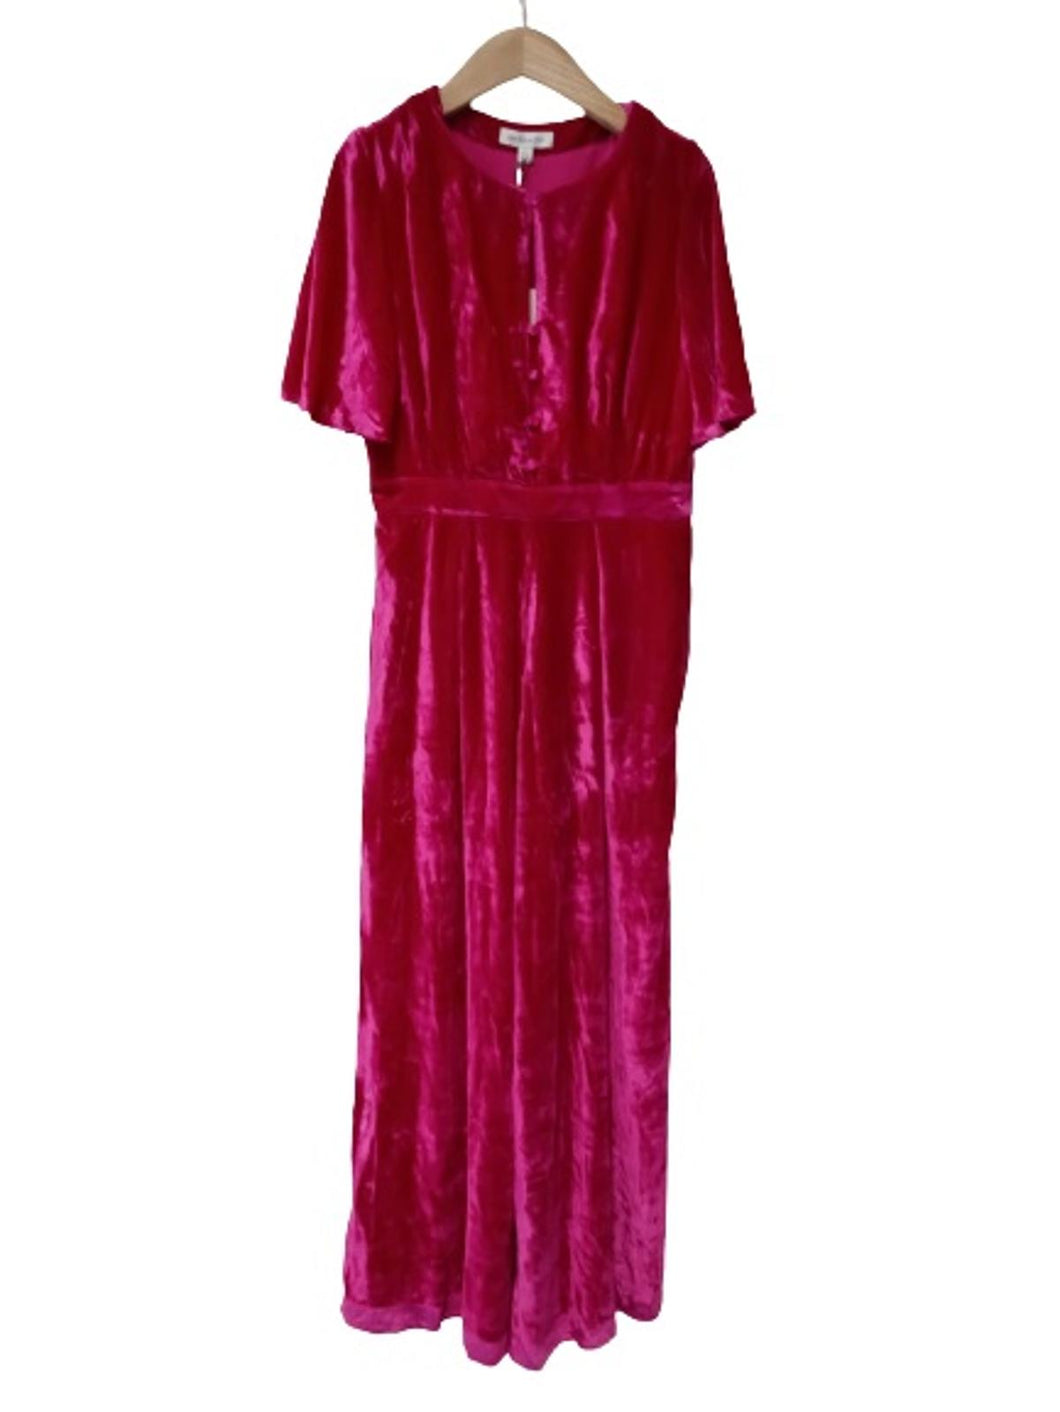 EMILY AND FIN Ladies Fuchsia Velvet Short Sleeve Remi Jumpsuit Size UK10 NEW